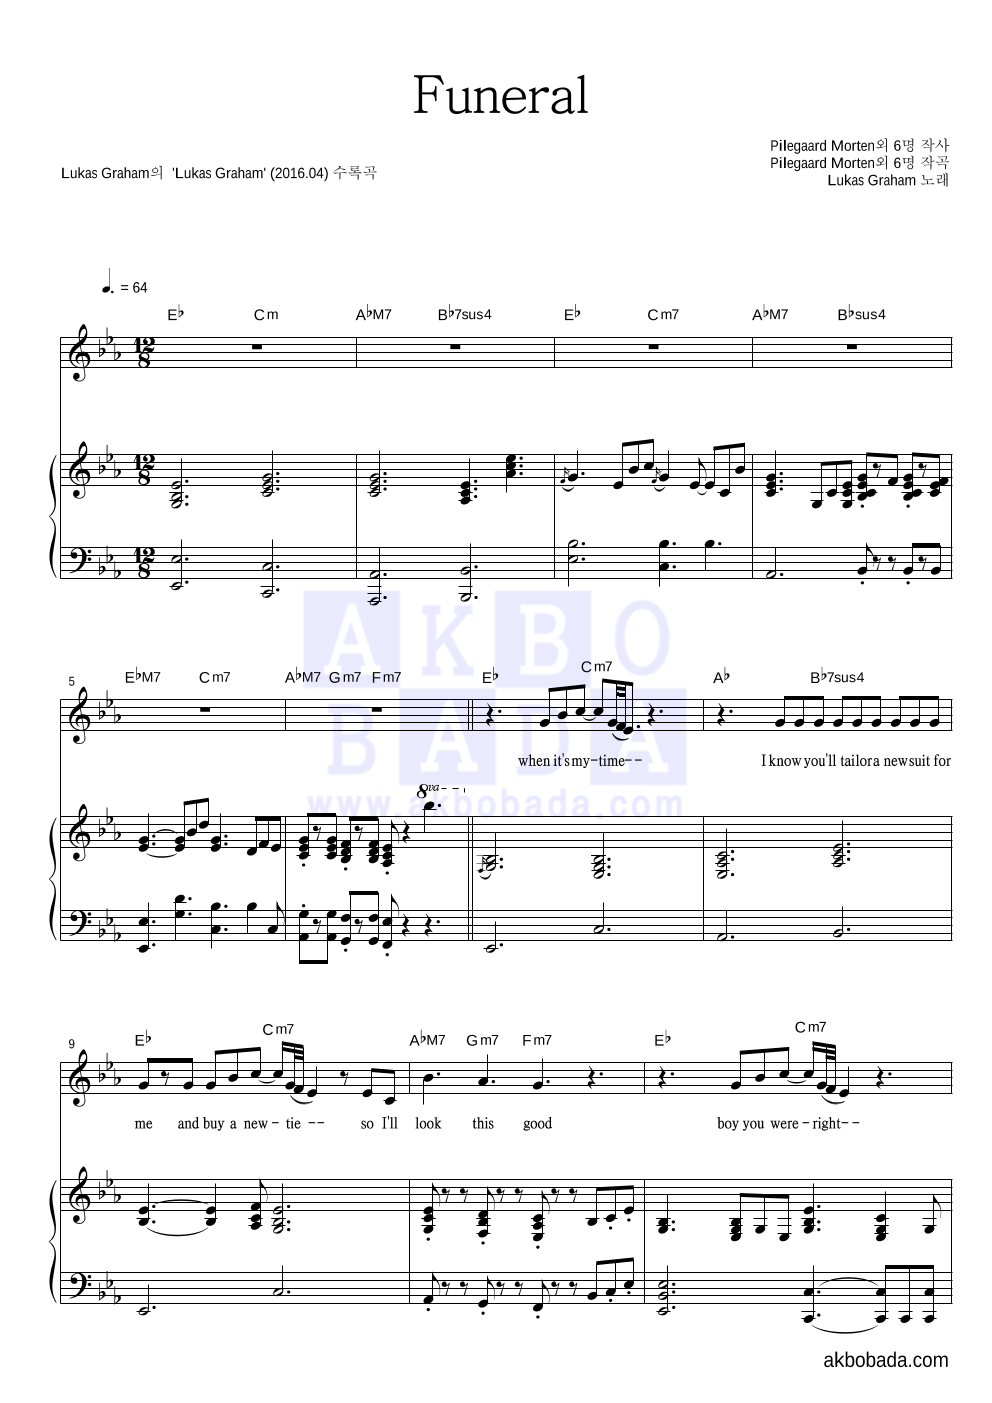 Lukas Graham - Funeral 피아노 3단 악보 